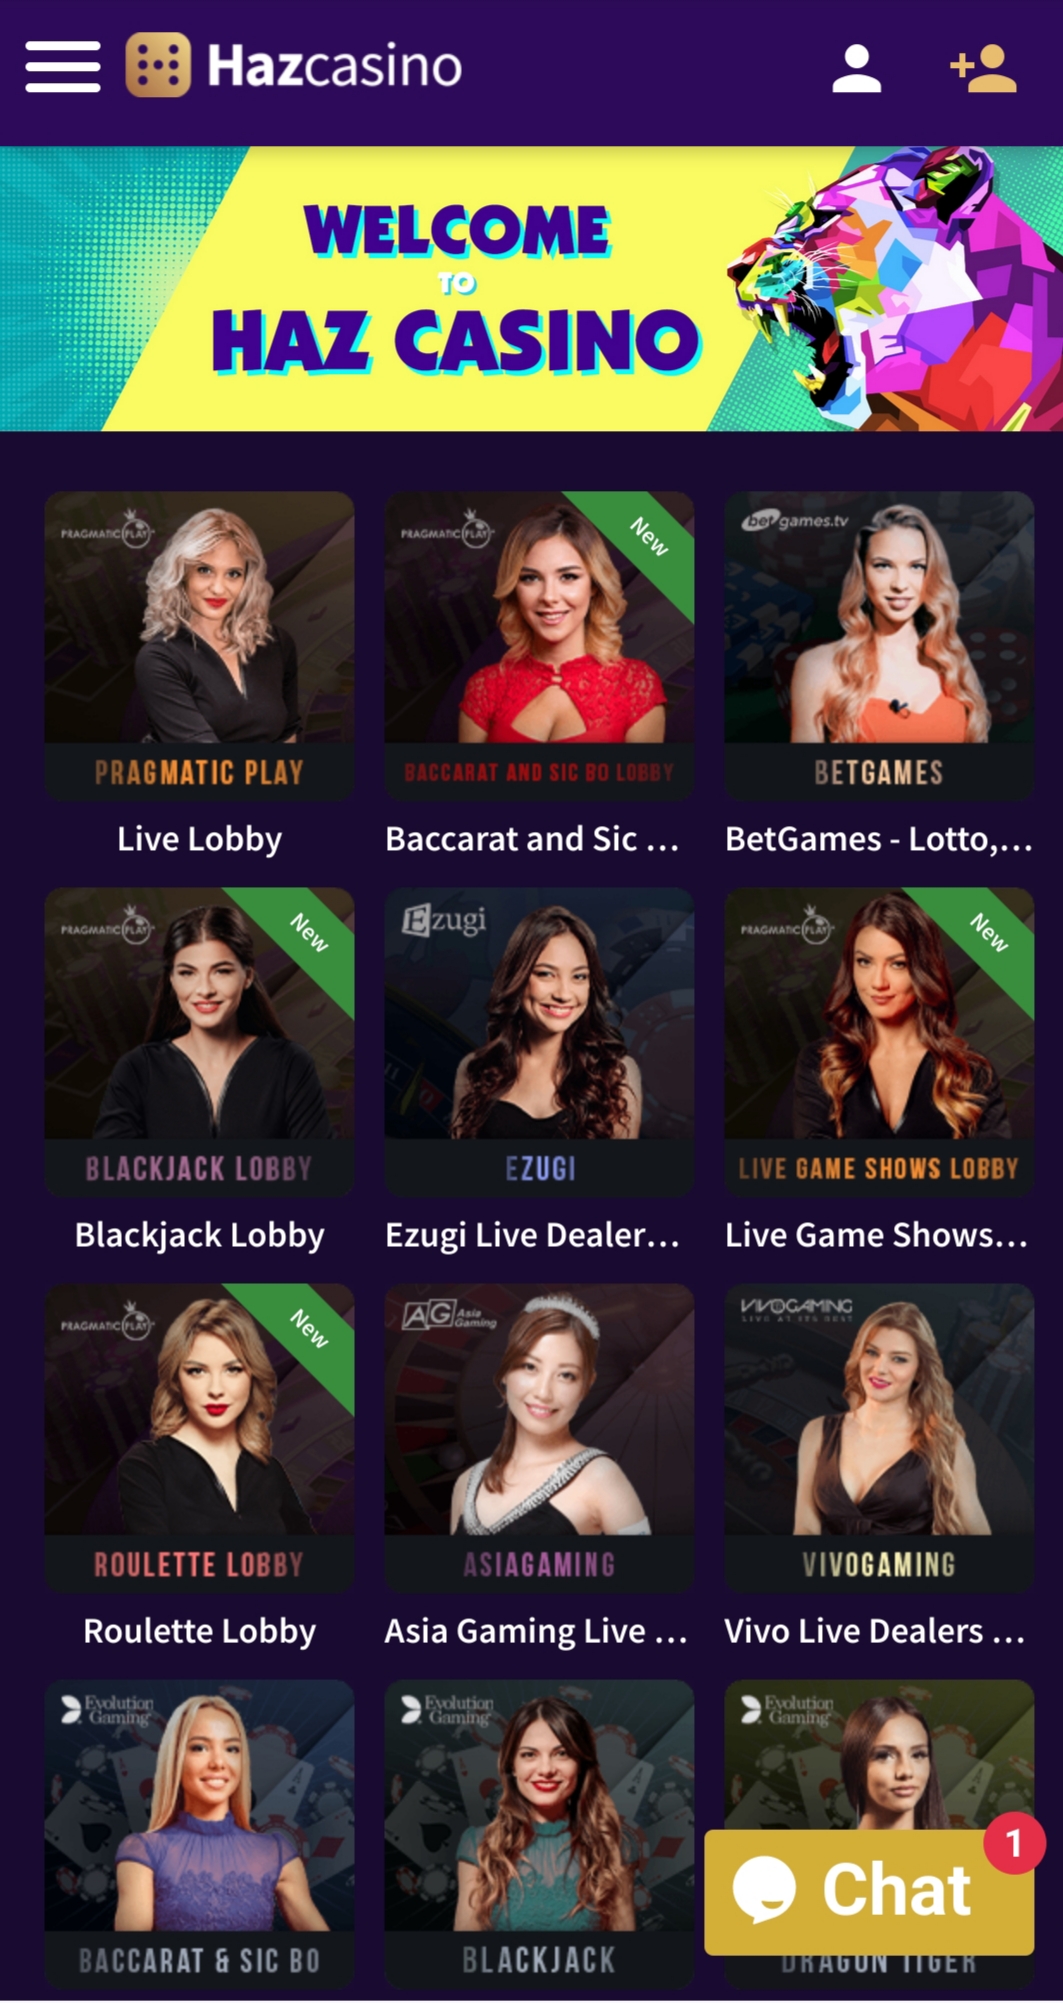 Haz Casino Mobile Live Dealer Games Review